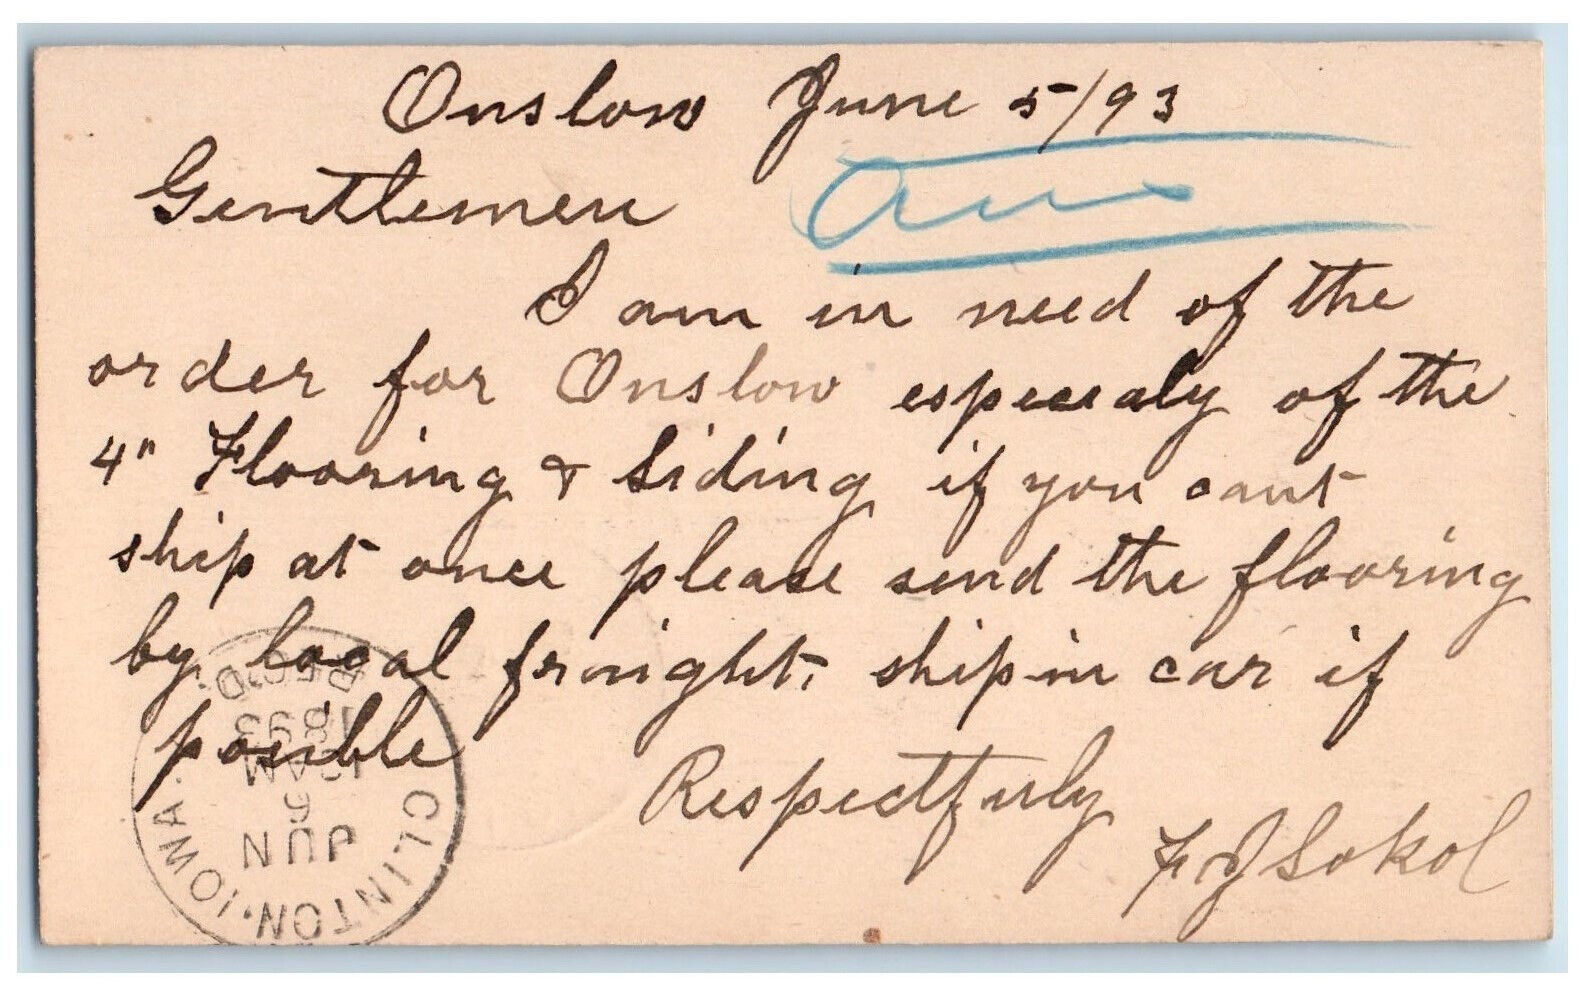 1893 Order for Onslow Flooring & Sliding Onslow IA Clinton Iowa IA Postal Card